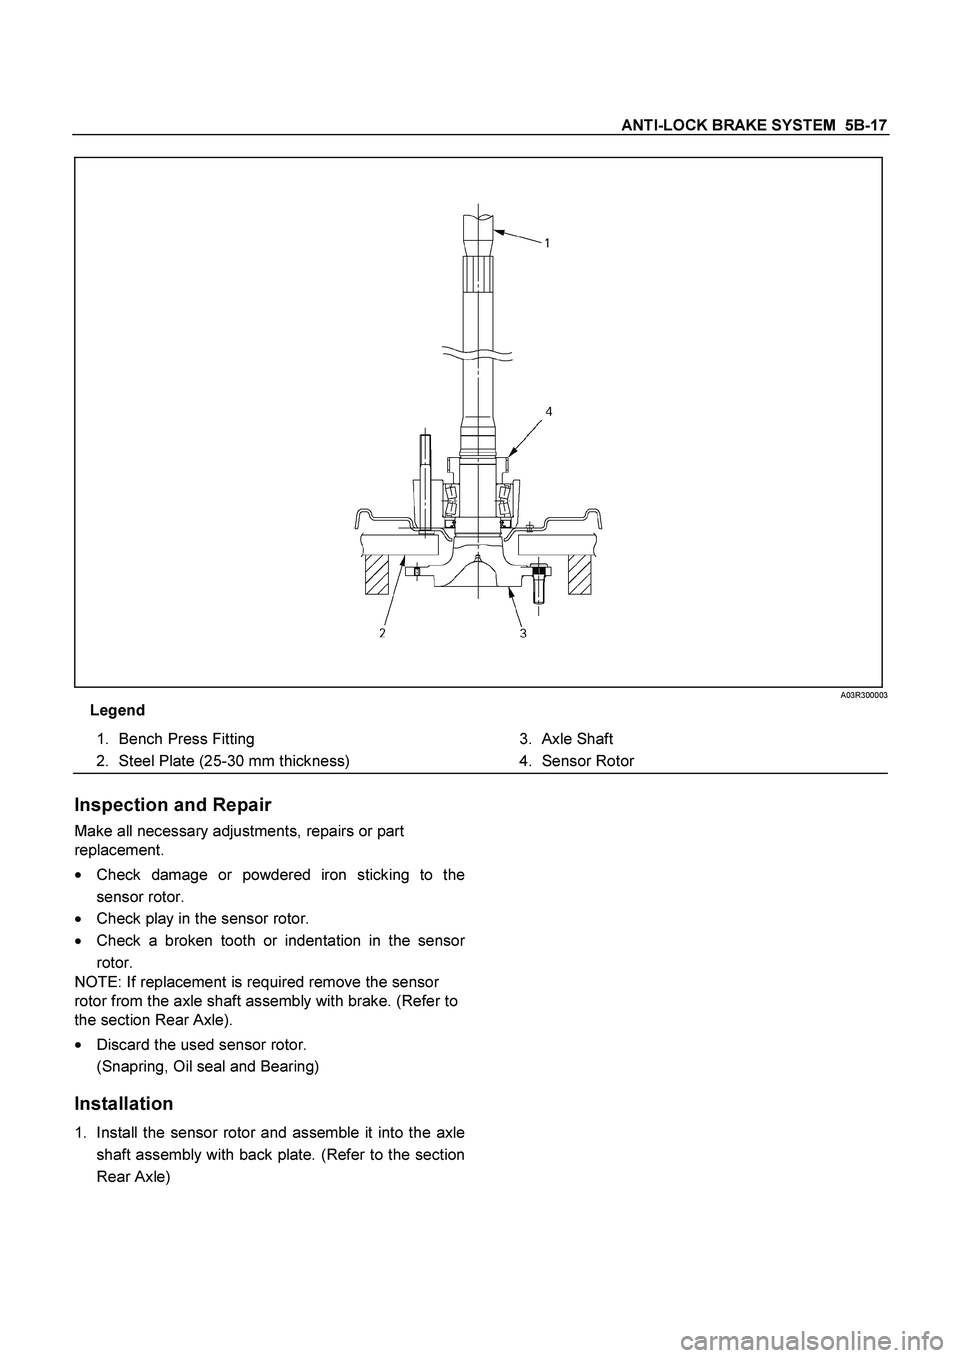 ISUZU TF SERIES 2004  Workshop Manual ANTI-LOCK BRAKE SYSTEM  5B-17
 
A03R300003
Legend
 
 
1. 
Bench Press Fitting 
 
2. 
Steel Plate (25-30 mm thickness)  
 
 
3. 
Axle Shaft 
 
4. 
Sensor Rotor 
 
Inspection and Repair 
Make all necess